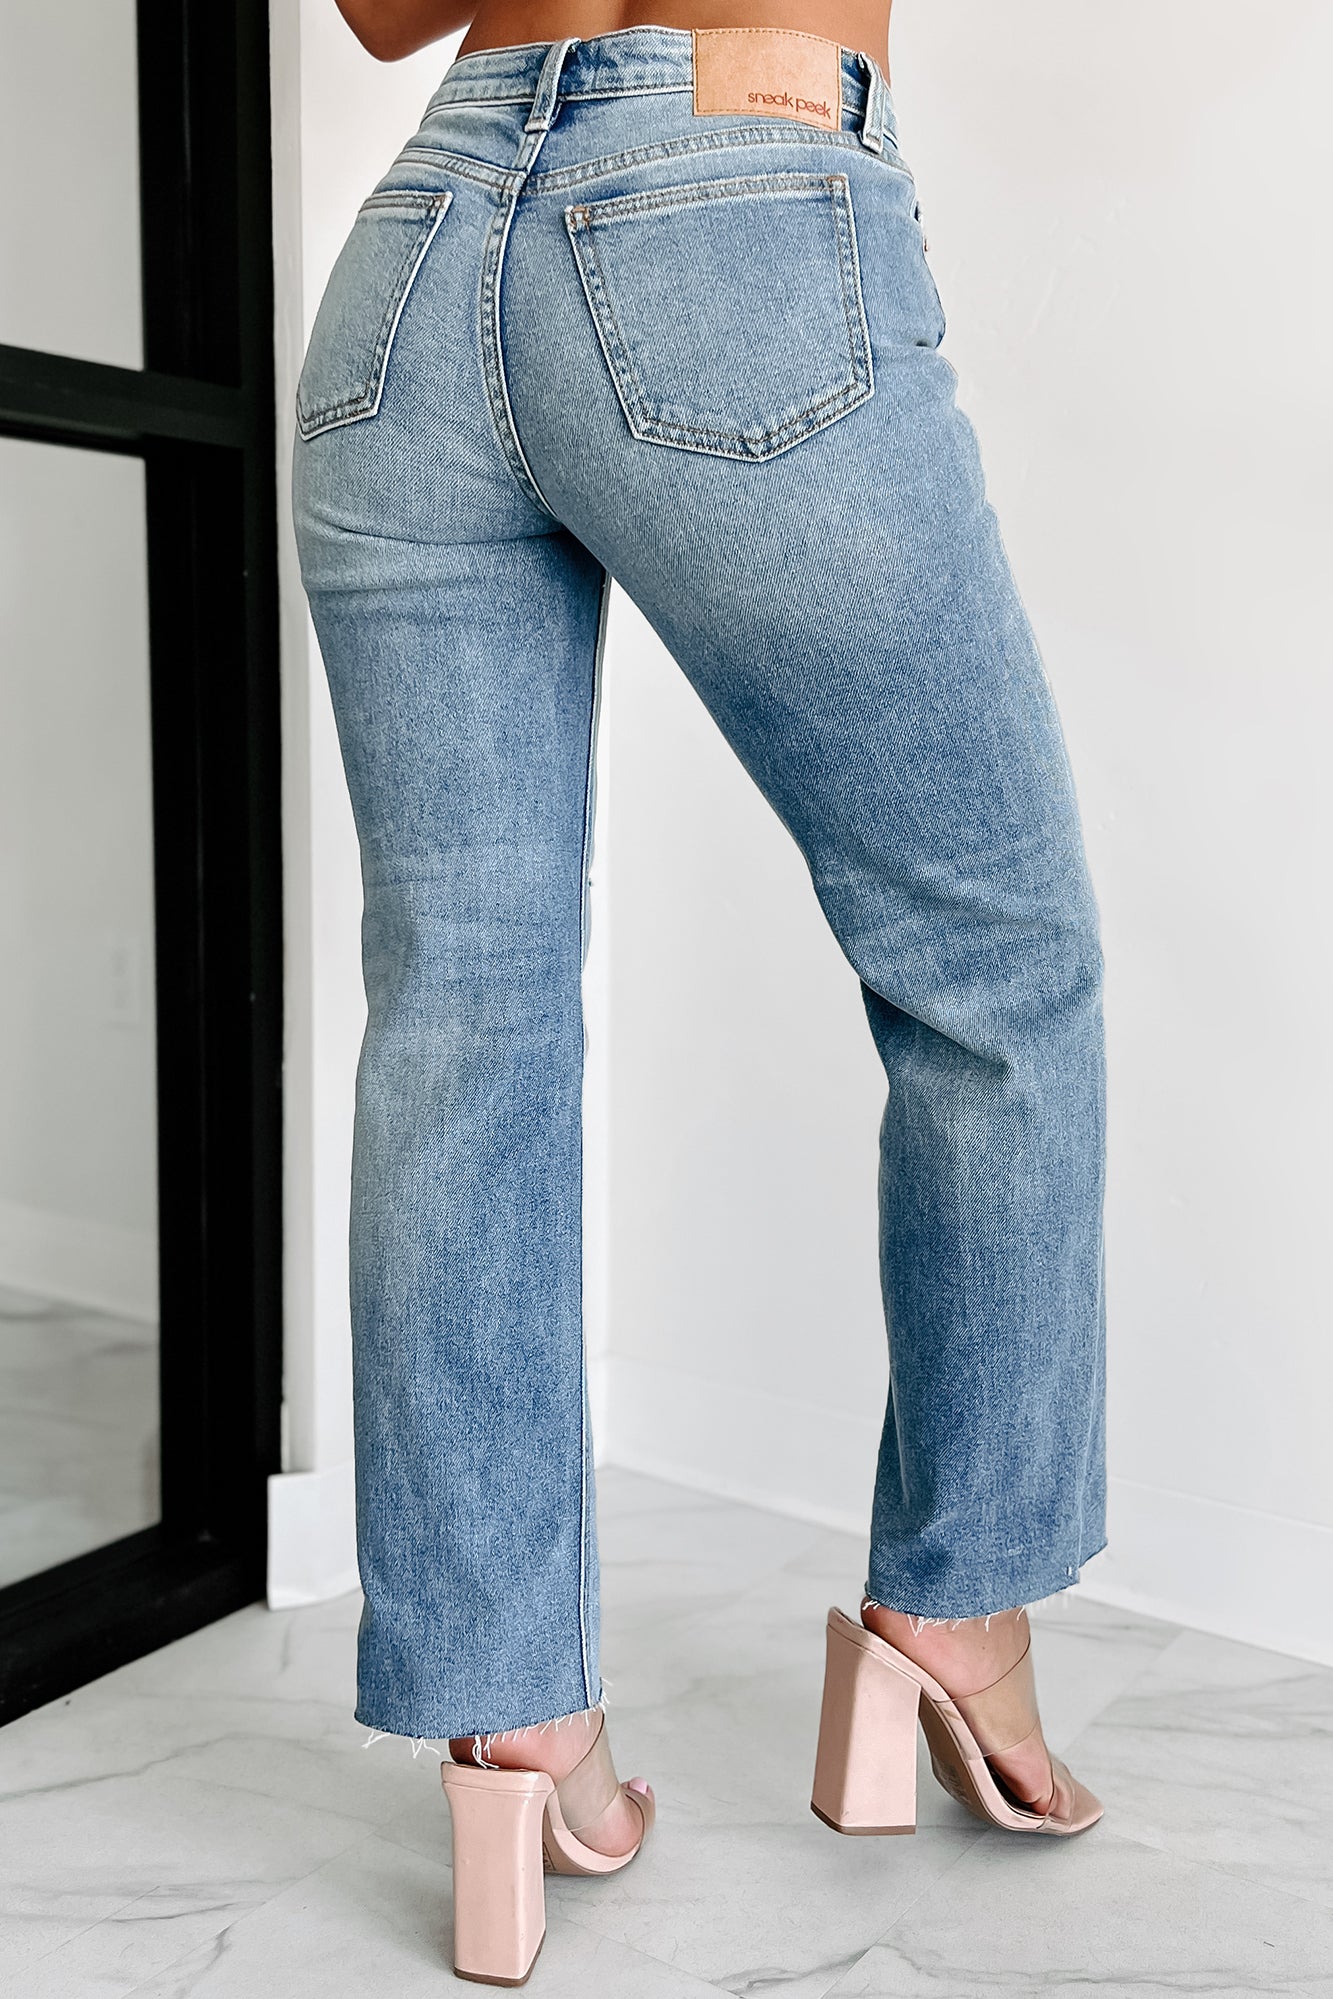 Keep My Composure Distressed Sneak Peek Straight Leg Jeans (Medium Light) - NanaMacs